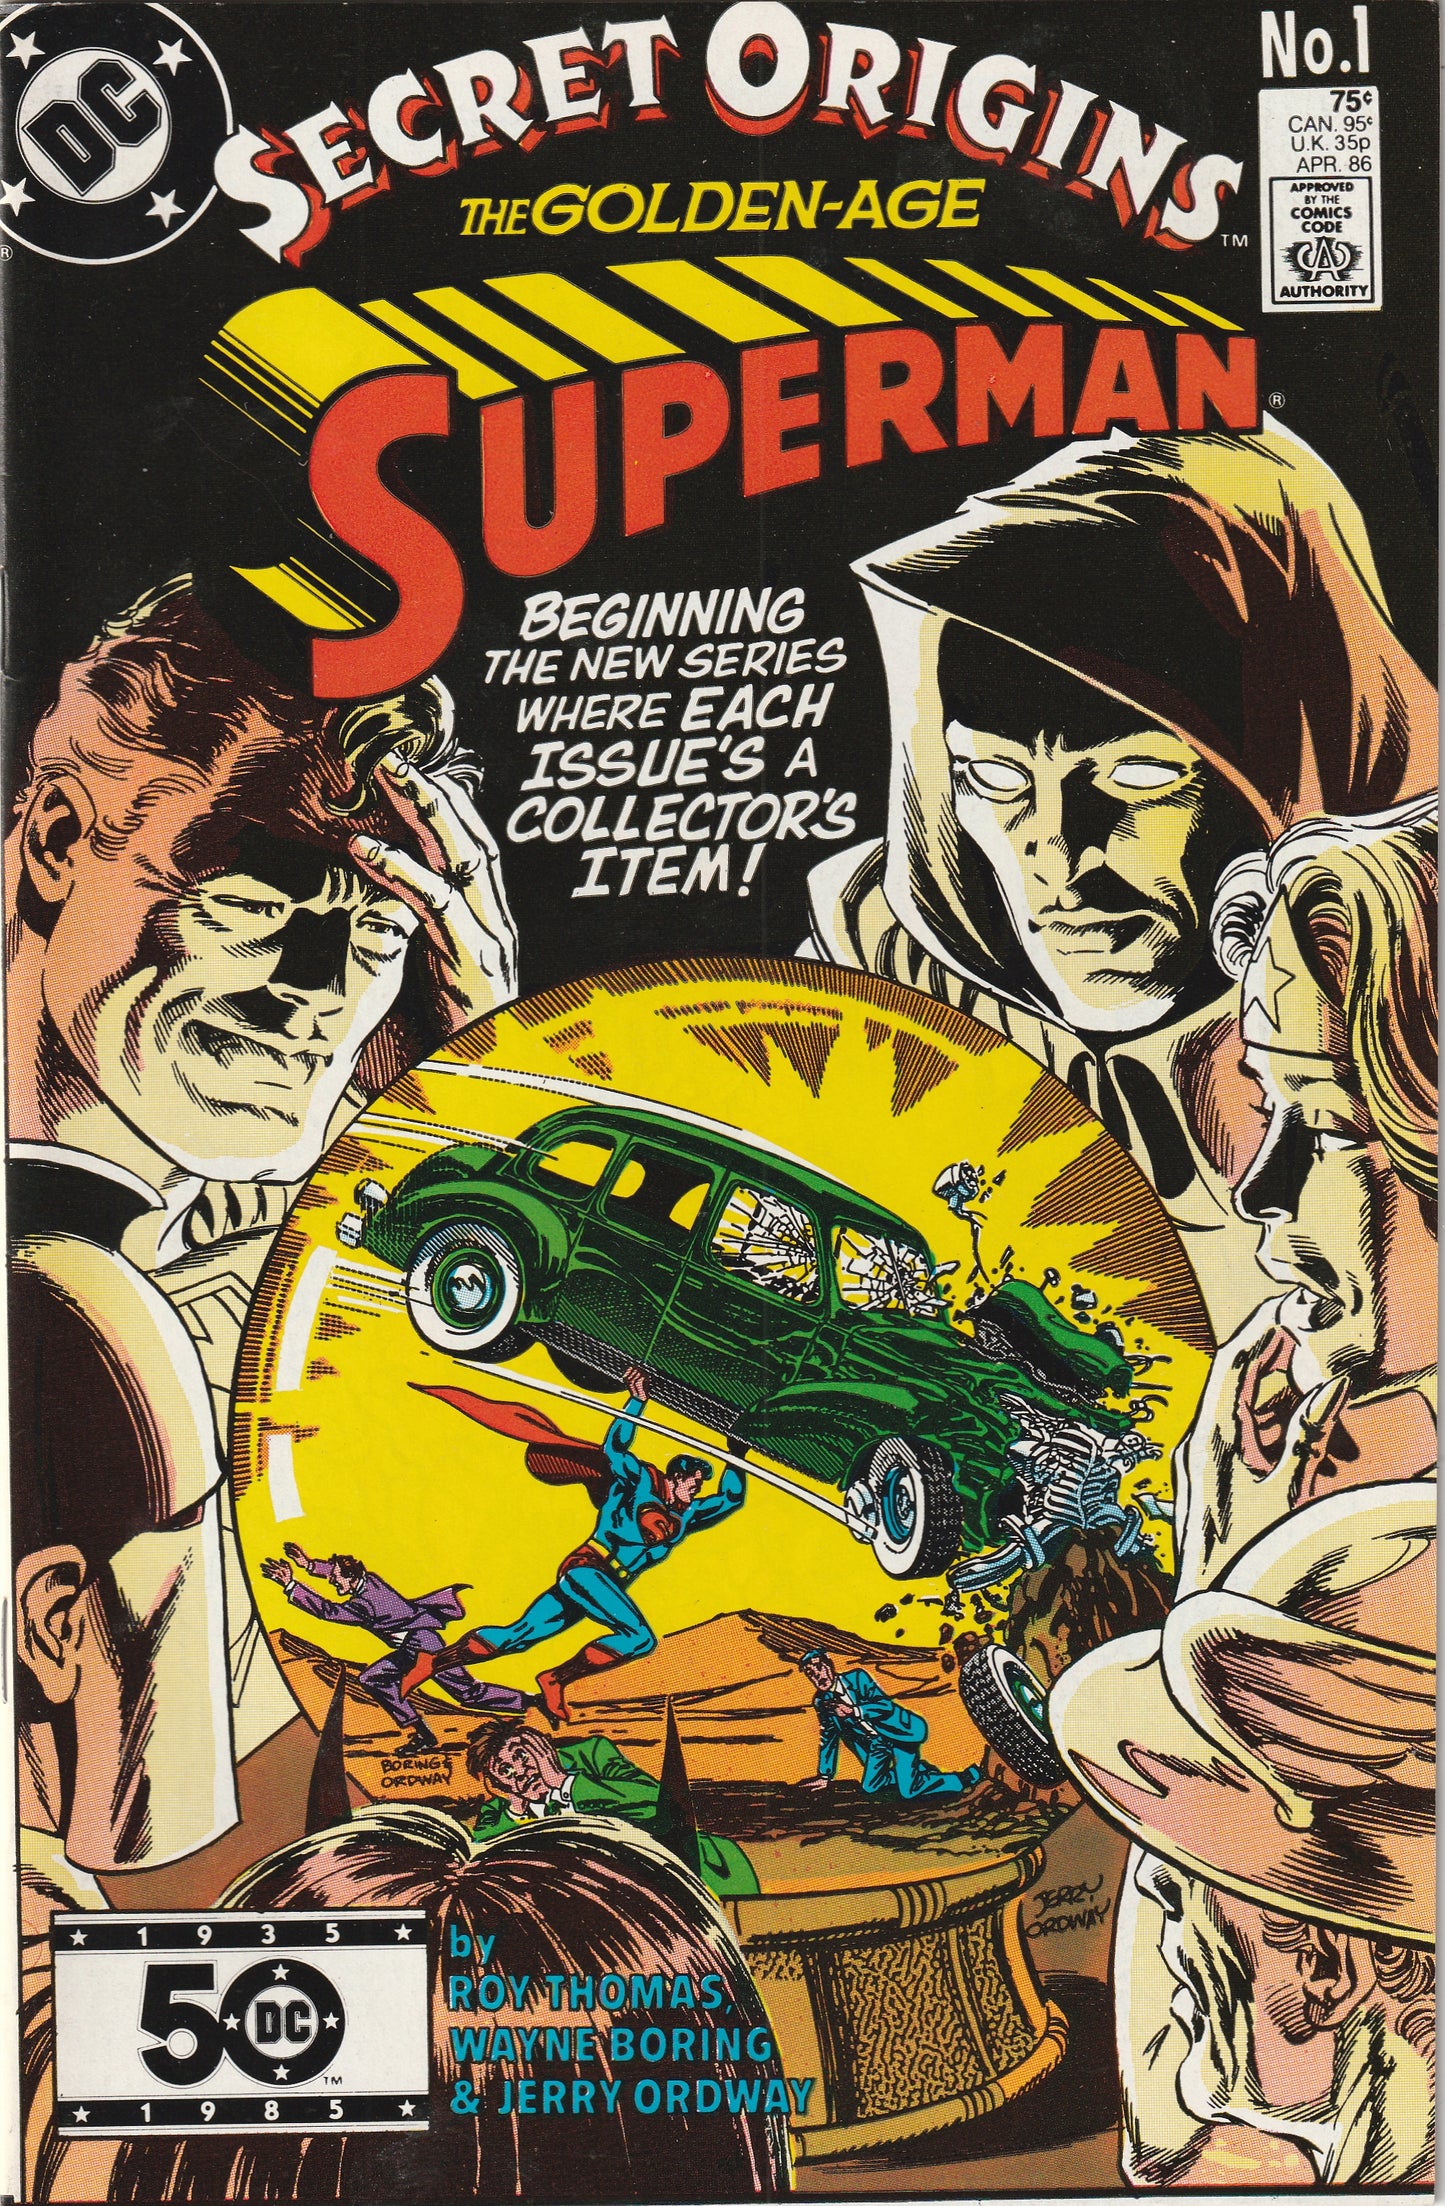 Secret Origins #1 (1986) - The Golden-Age Superman